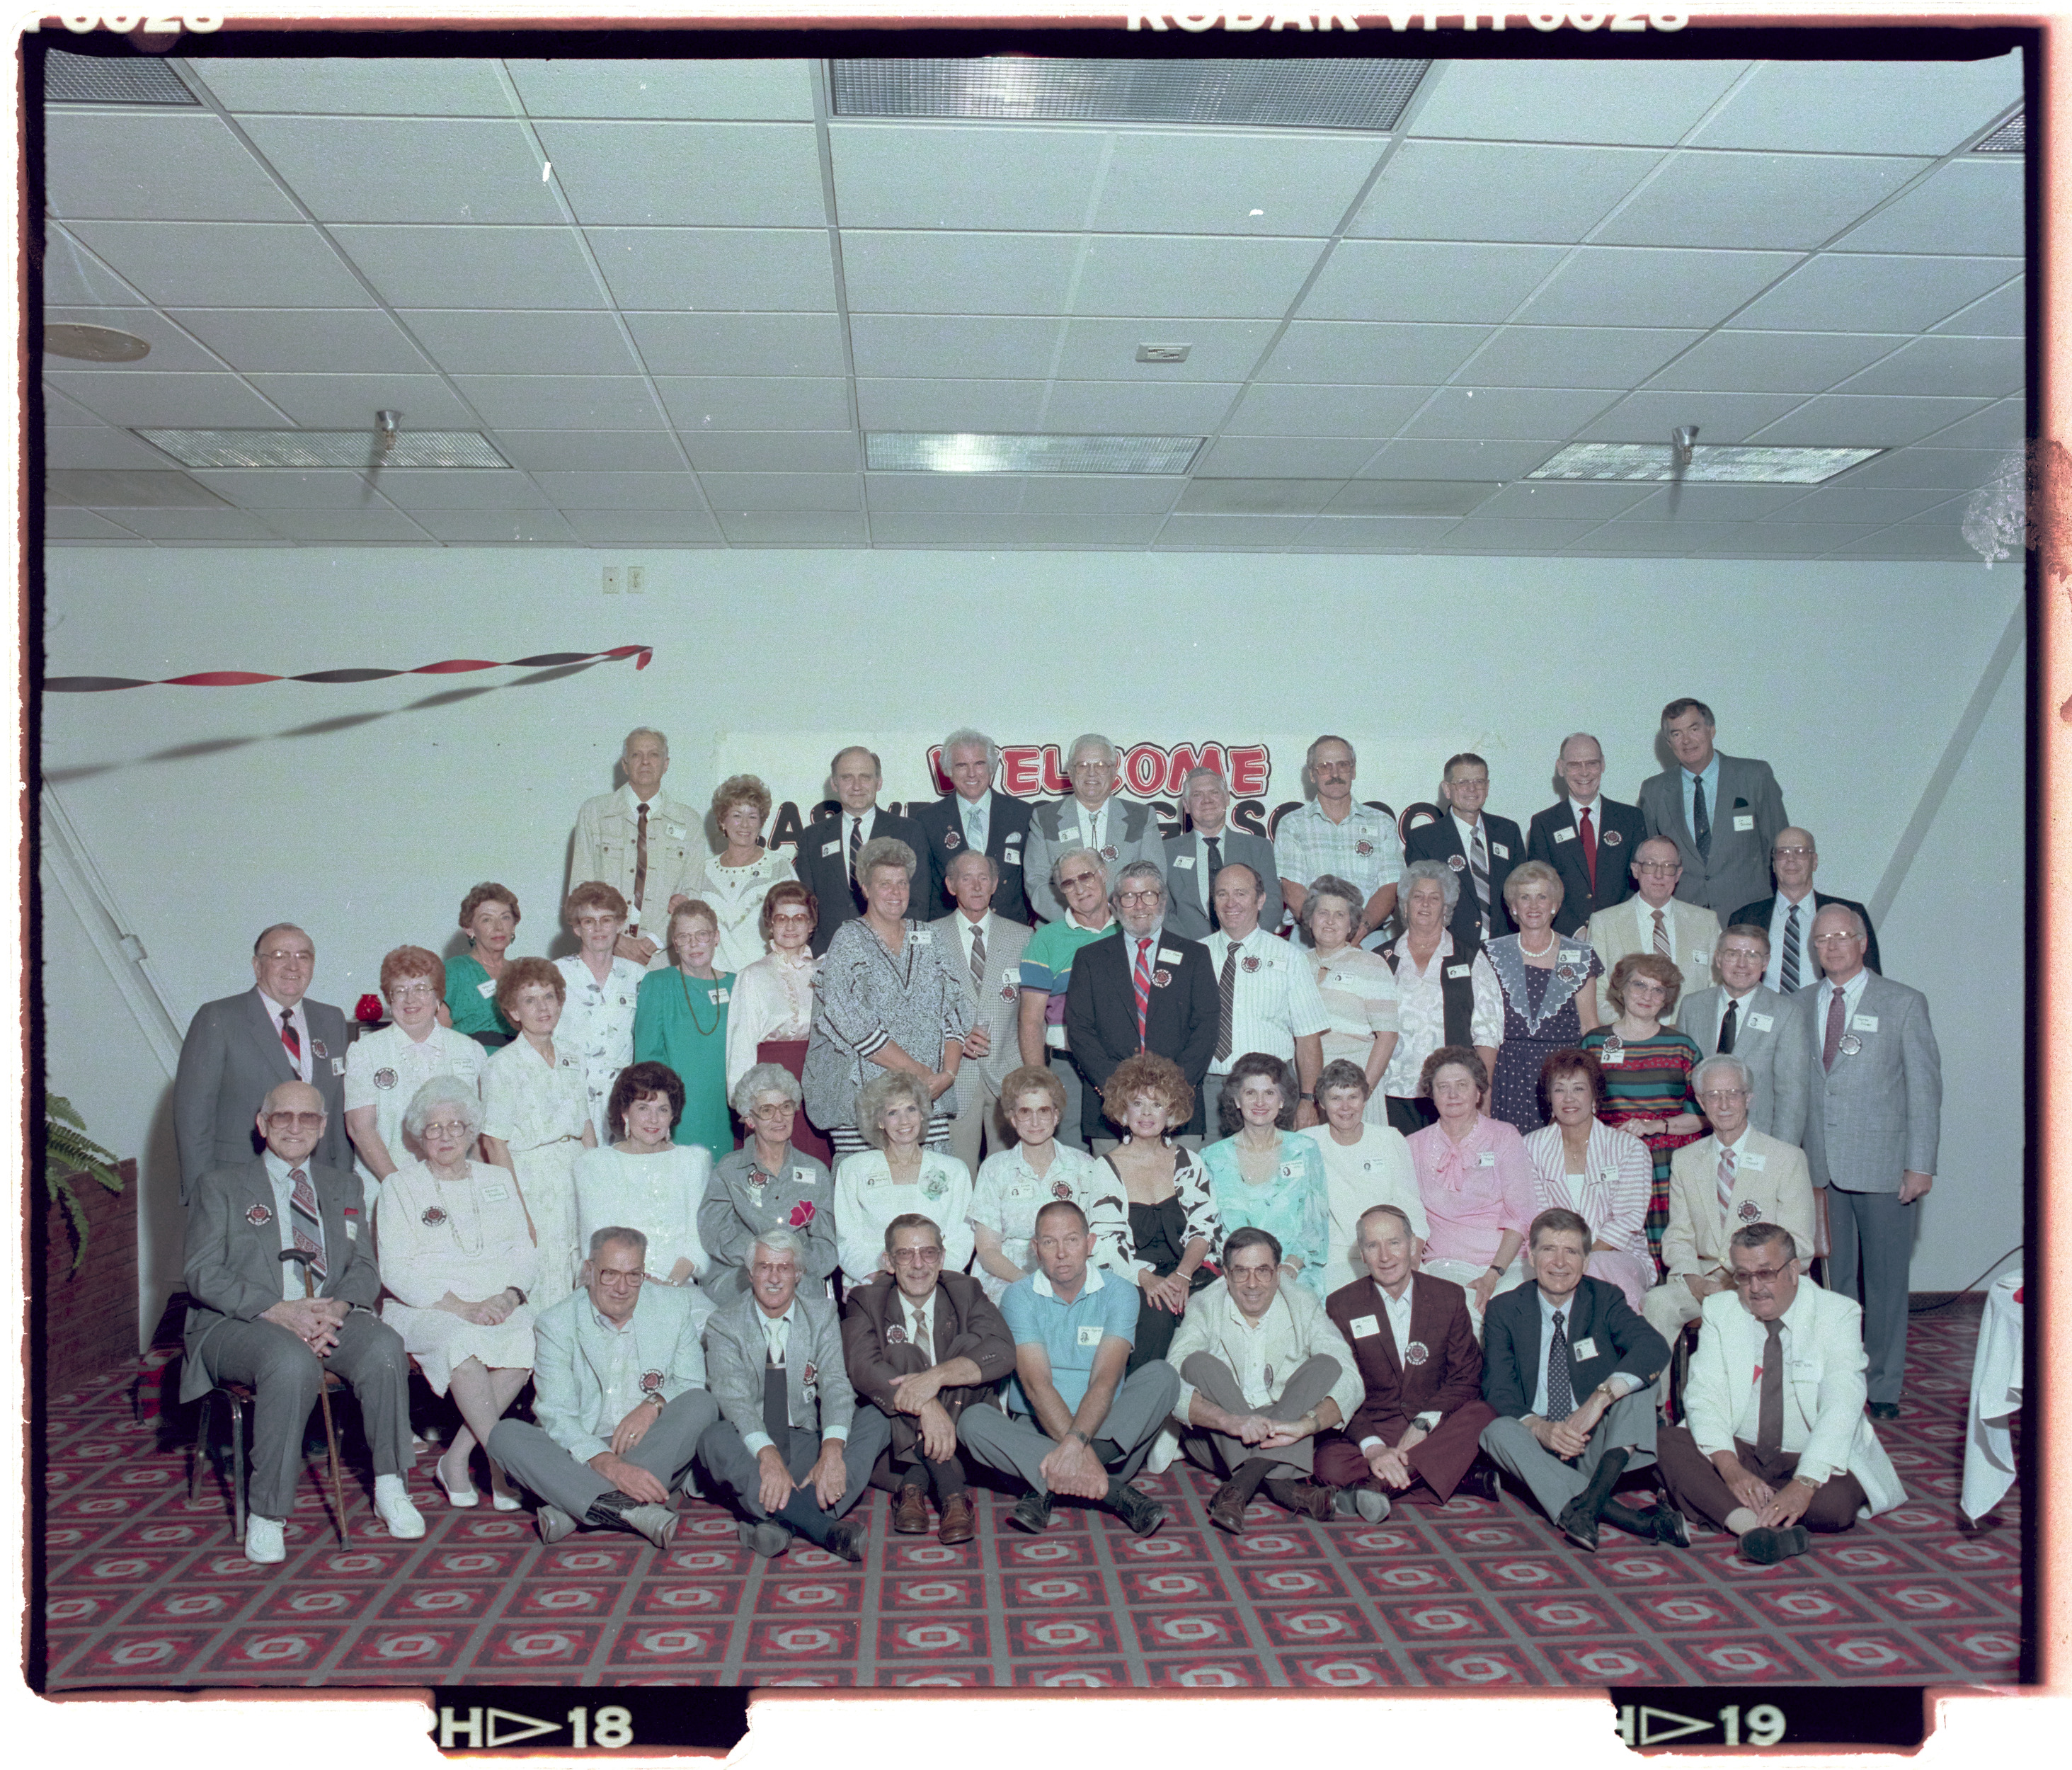 Photographs of LVHS Class Reunion, image 01